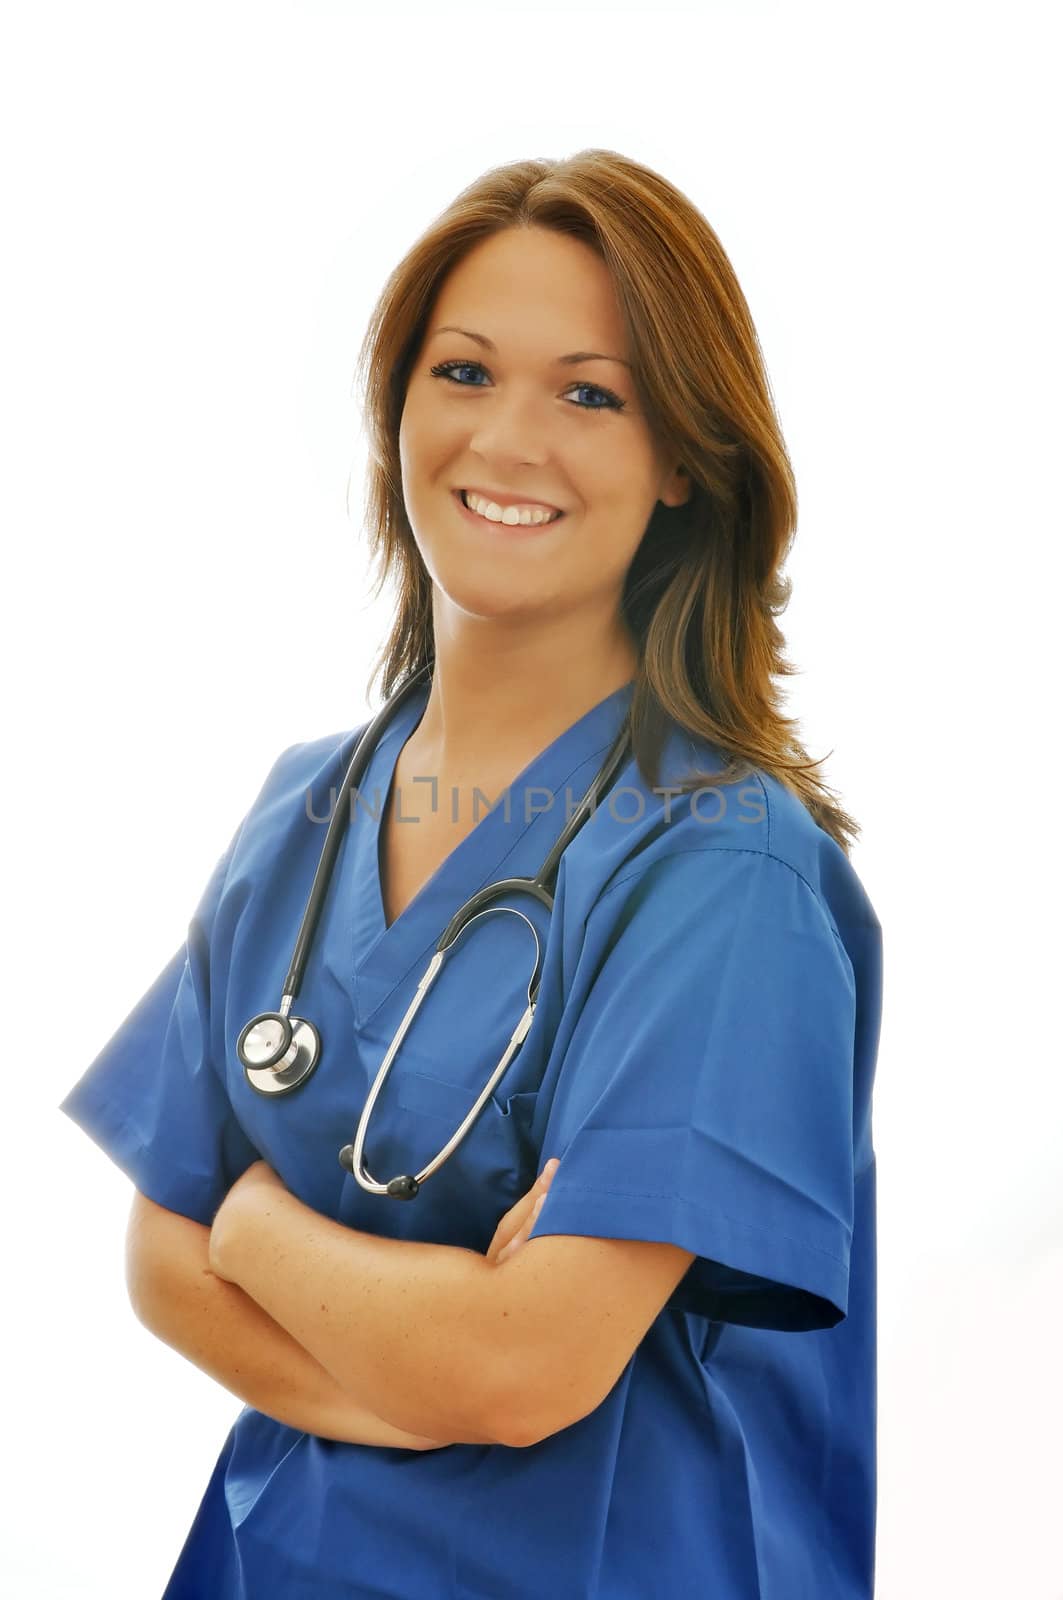 Smiling Female Nurse with Stethoscope Isolated by dehooks